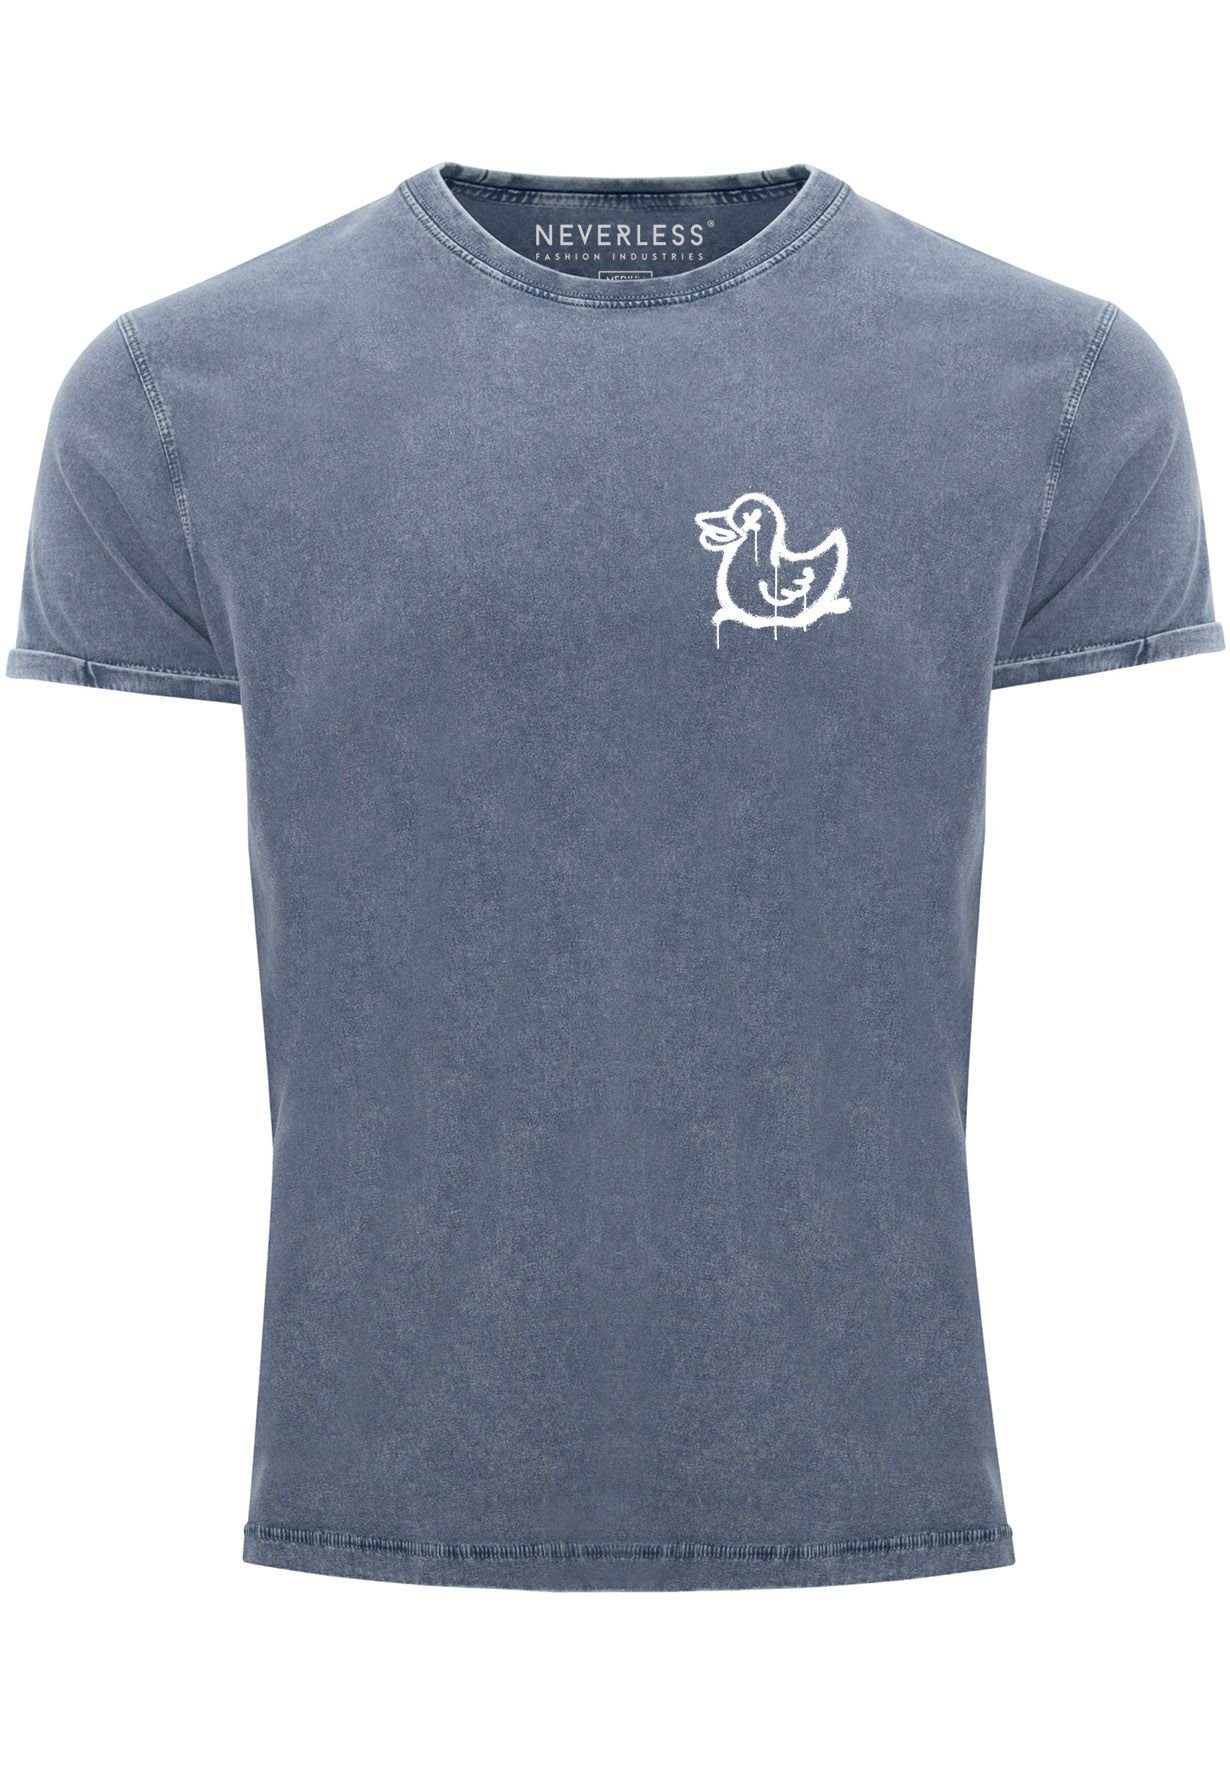 Neverless T-Shir Herren Duck blau Style Print Printshirt Graffiti Shirt Ente Print-Shirt mit Vintage Drippy